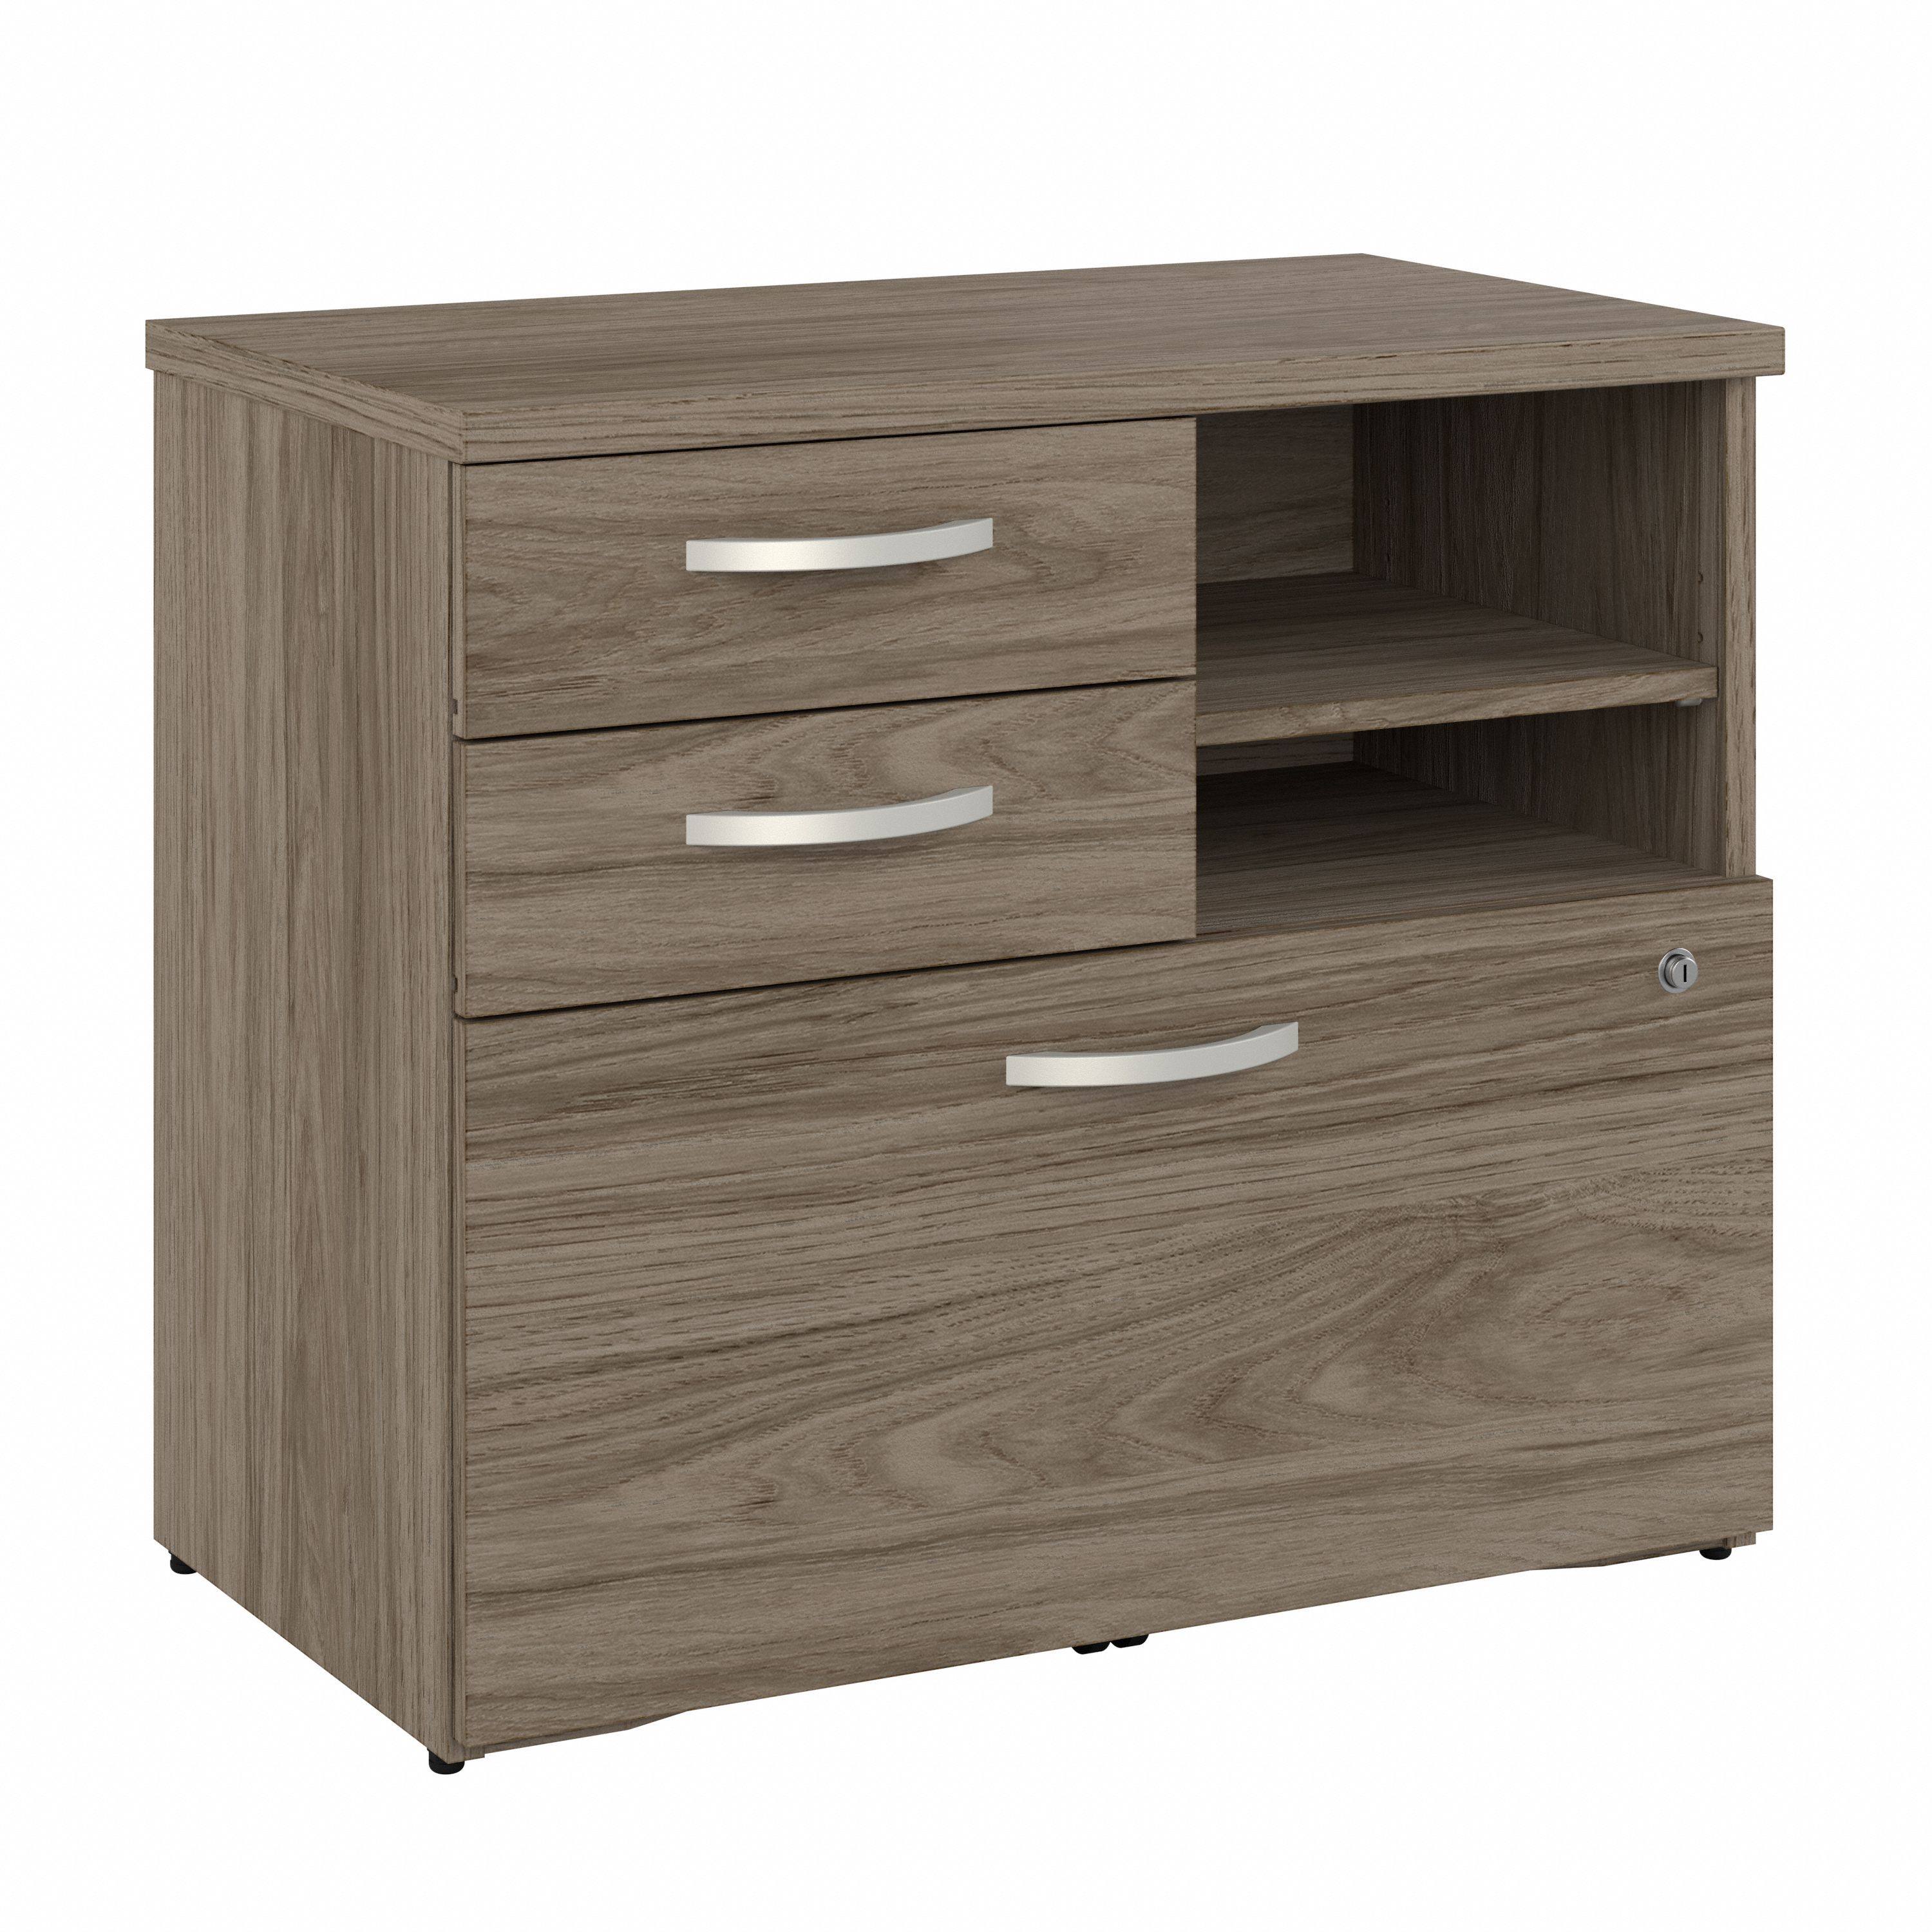 Shop Bush Business Furniture Hybrid Office Storage Cabinet with Drawers and Shelves 02 HYF130MHSU-Z #color_modern hickory